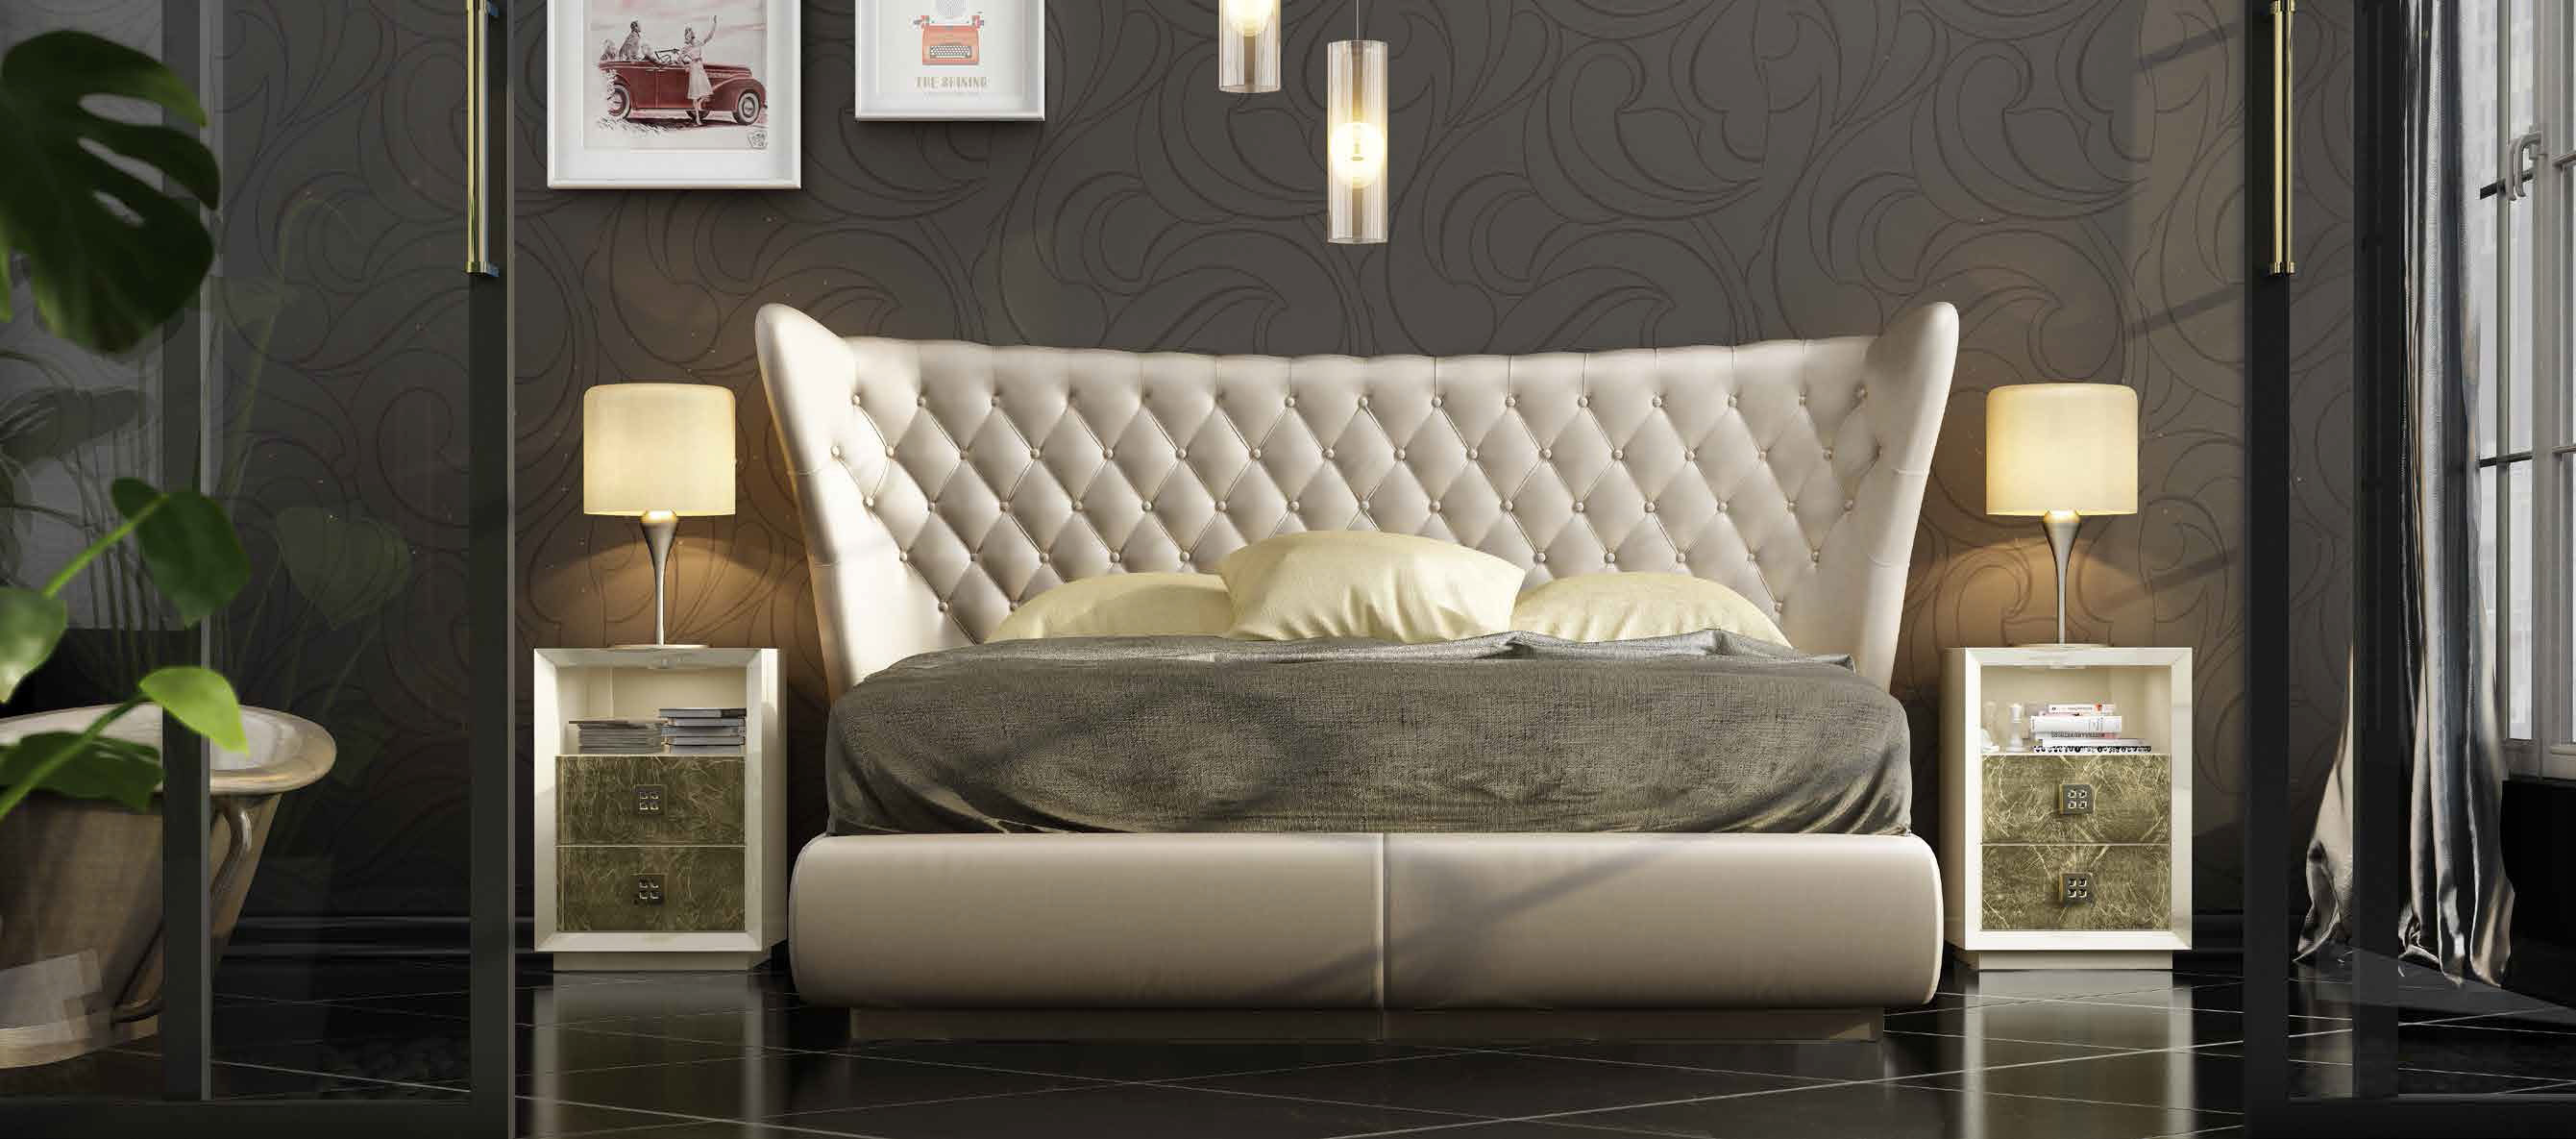 Brands Franco Furniture Bedrooms vol1, Spain DOR 48